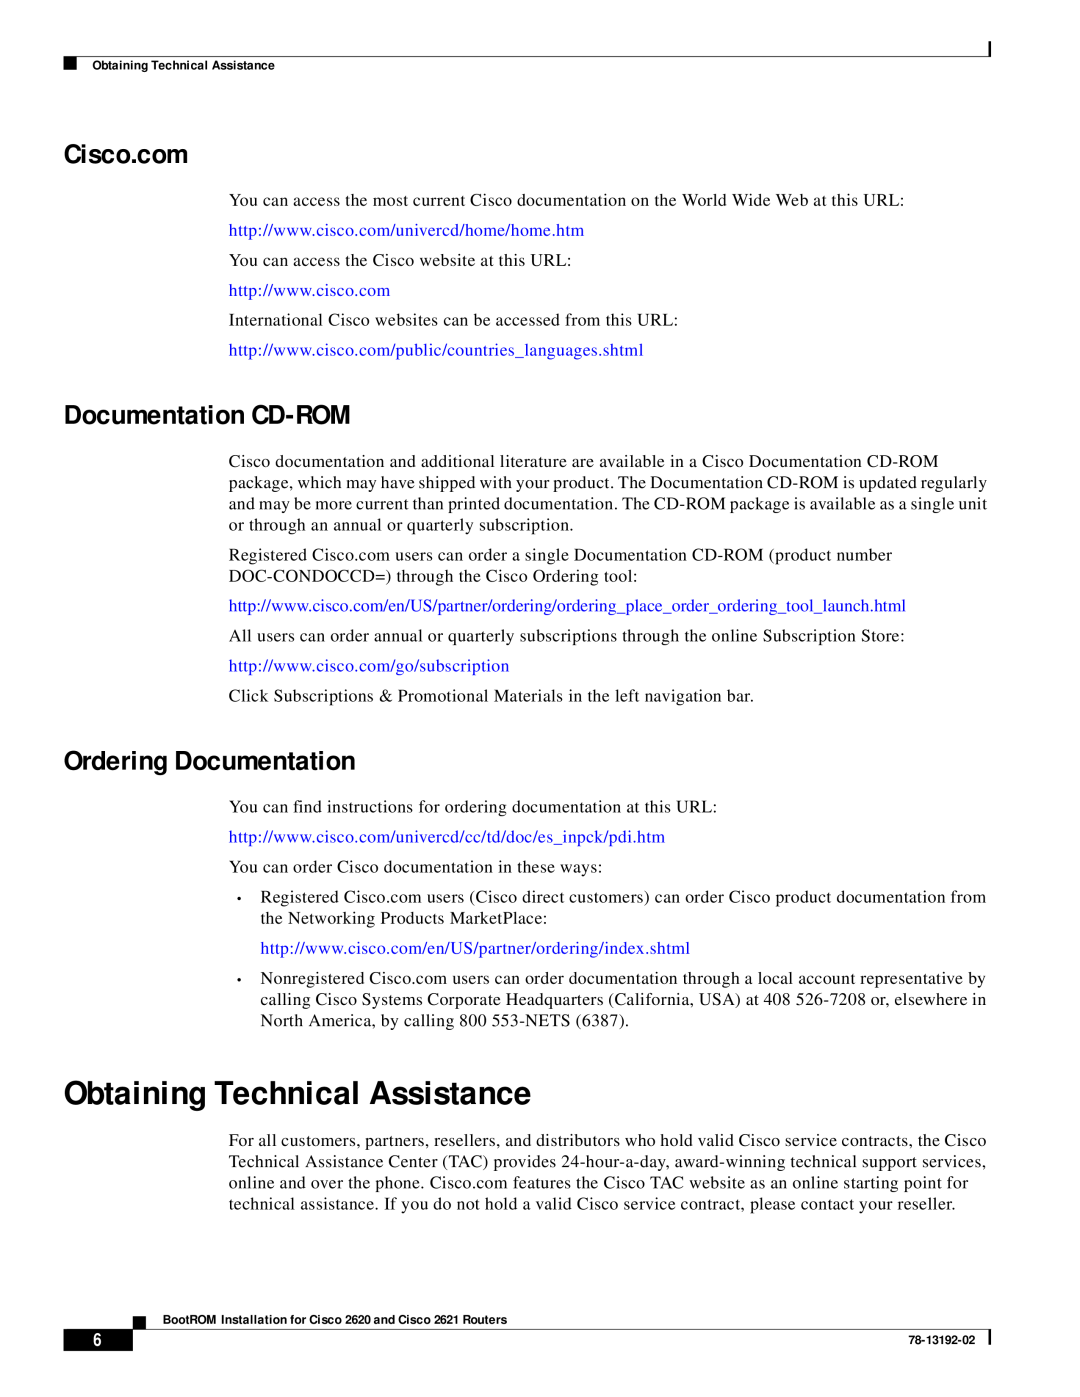 Cisco Systems 2621, 2620 manual Obtaining Technical Assistance, Cisco.com, Documentation CD-ROM, Ordering Documentation 